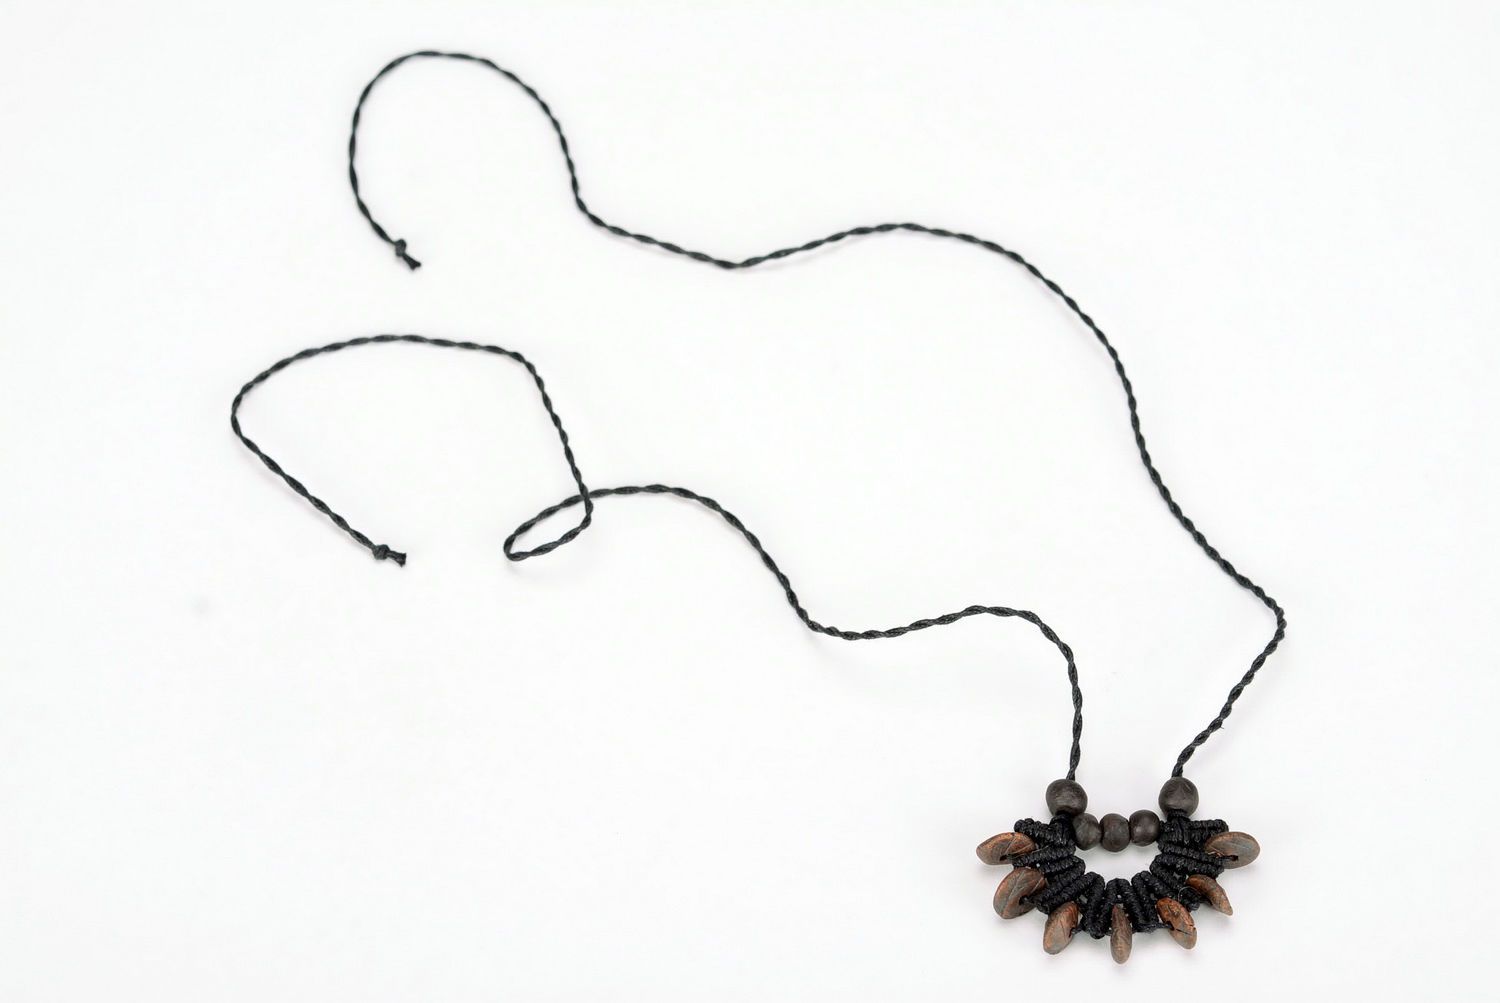 Clay bead necklace photo 2